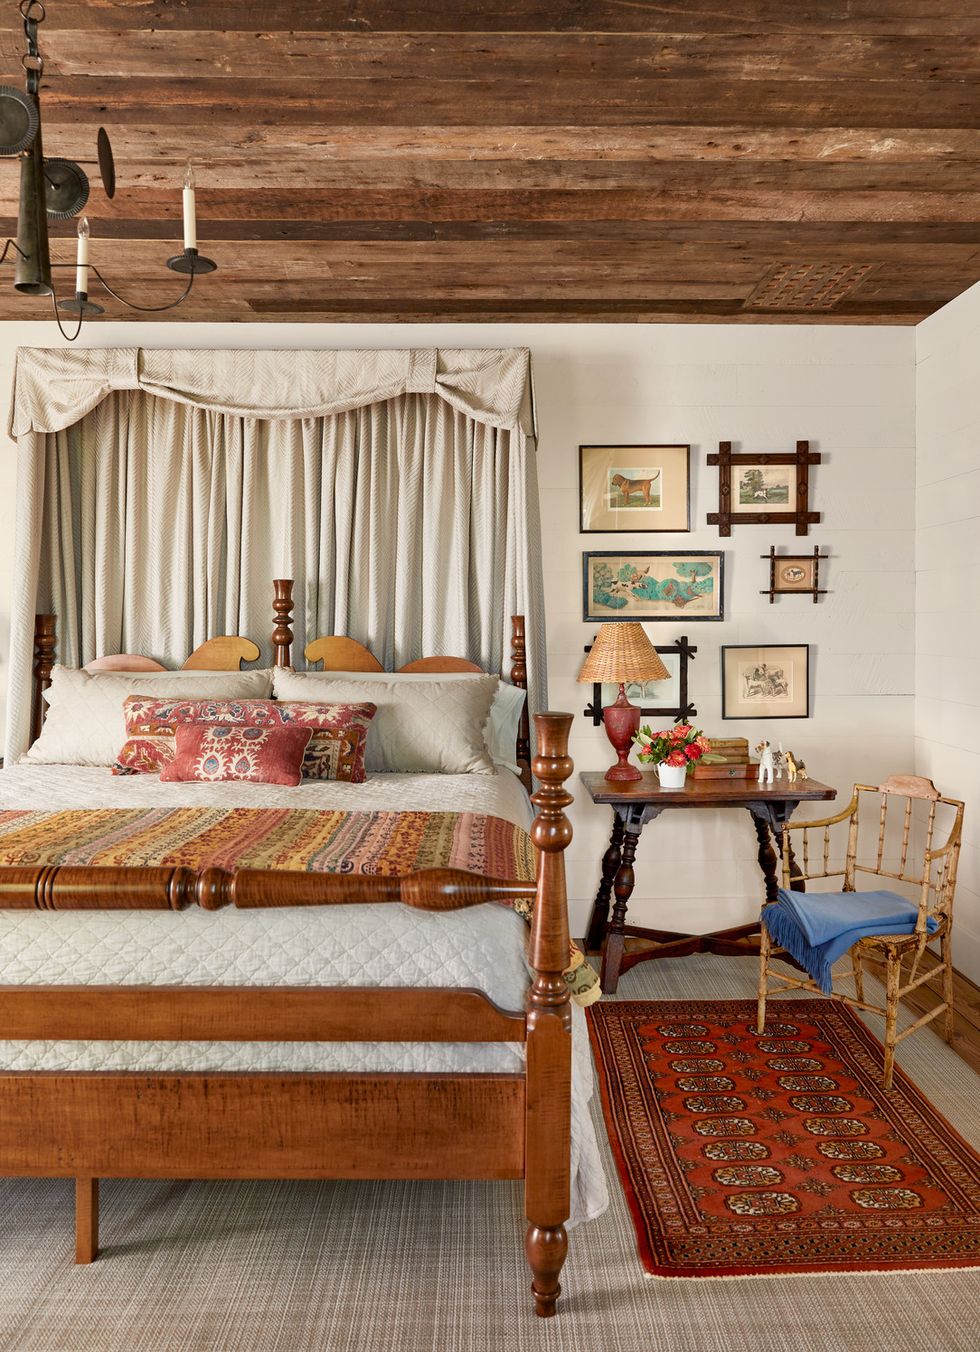 8 Stunning Bedroom Furniture Designs for You